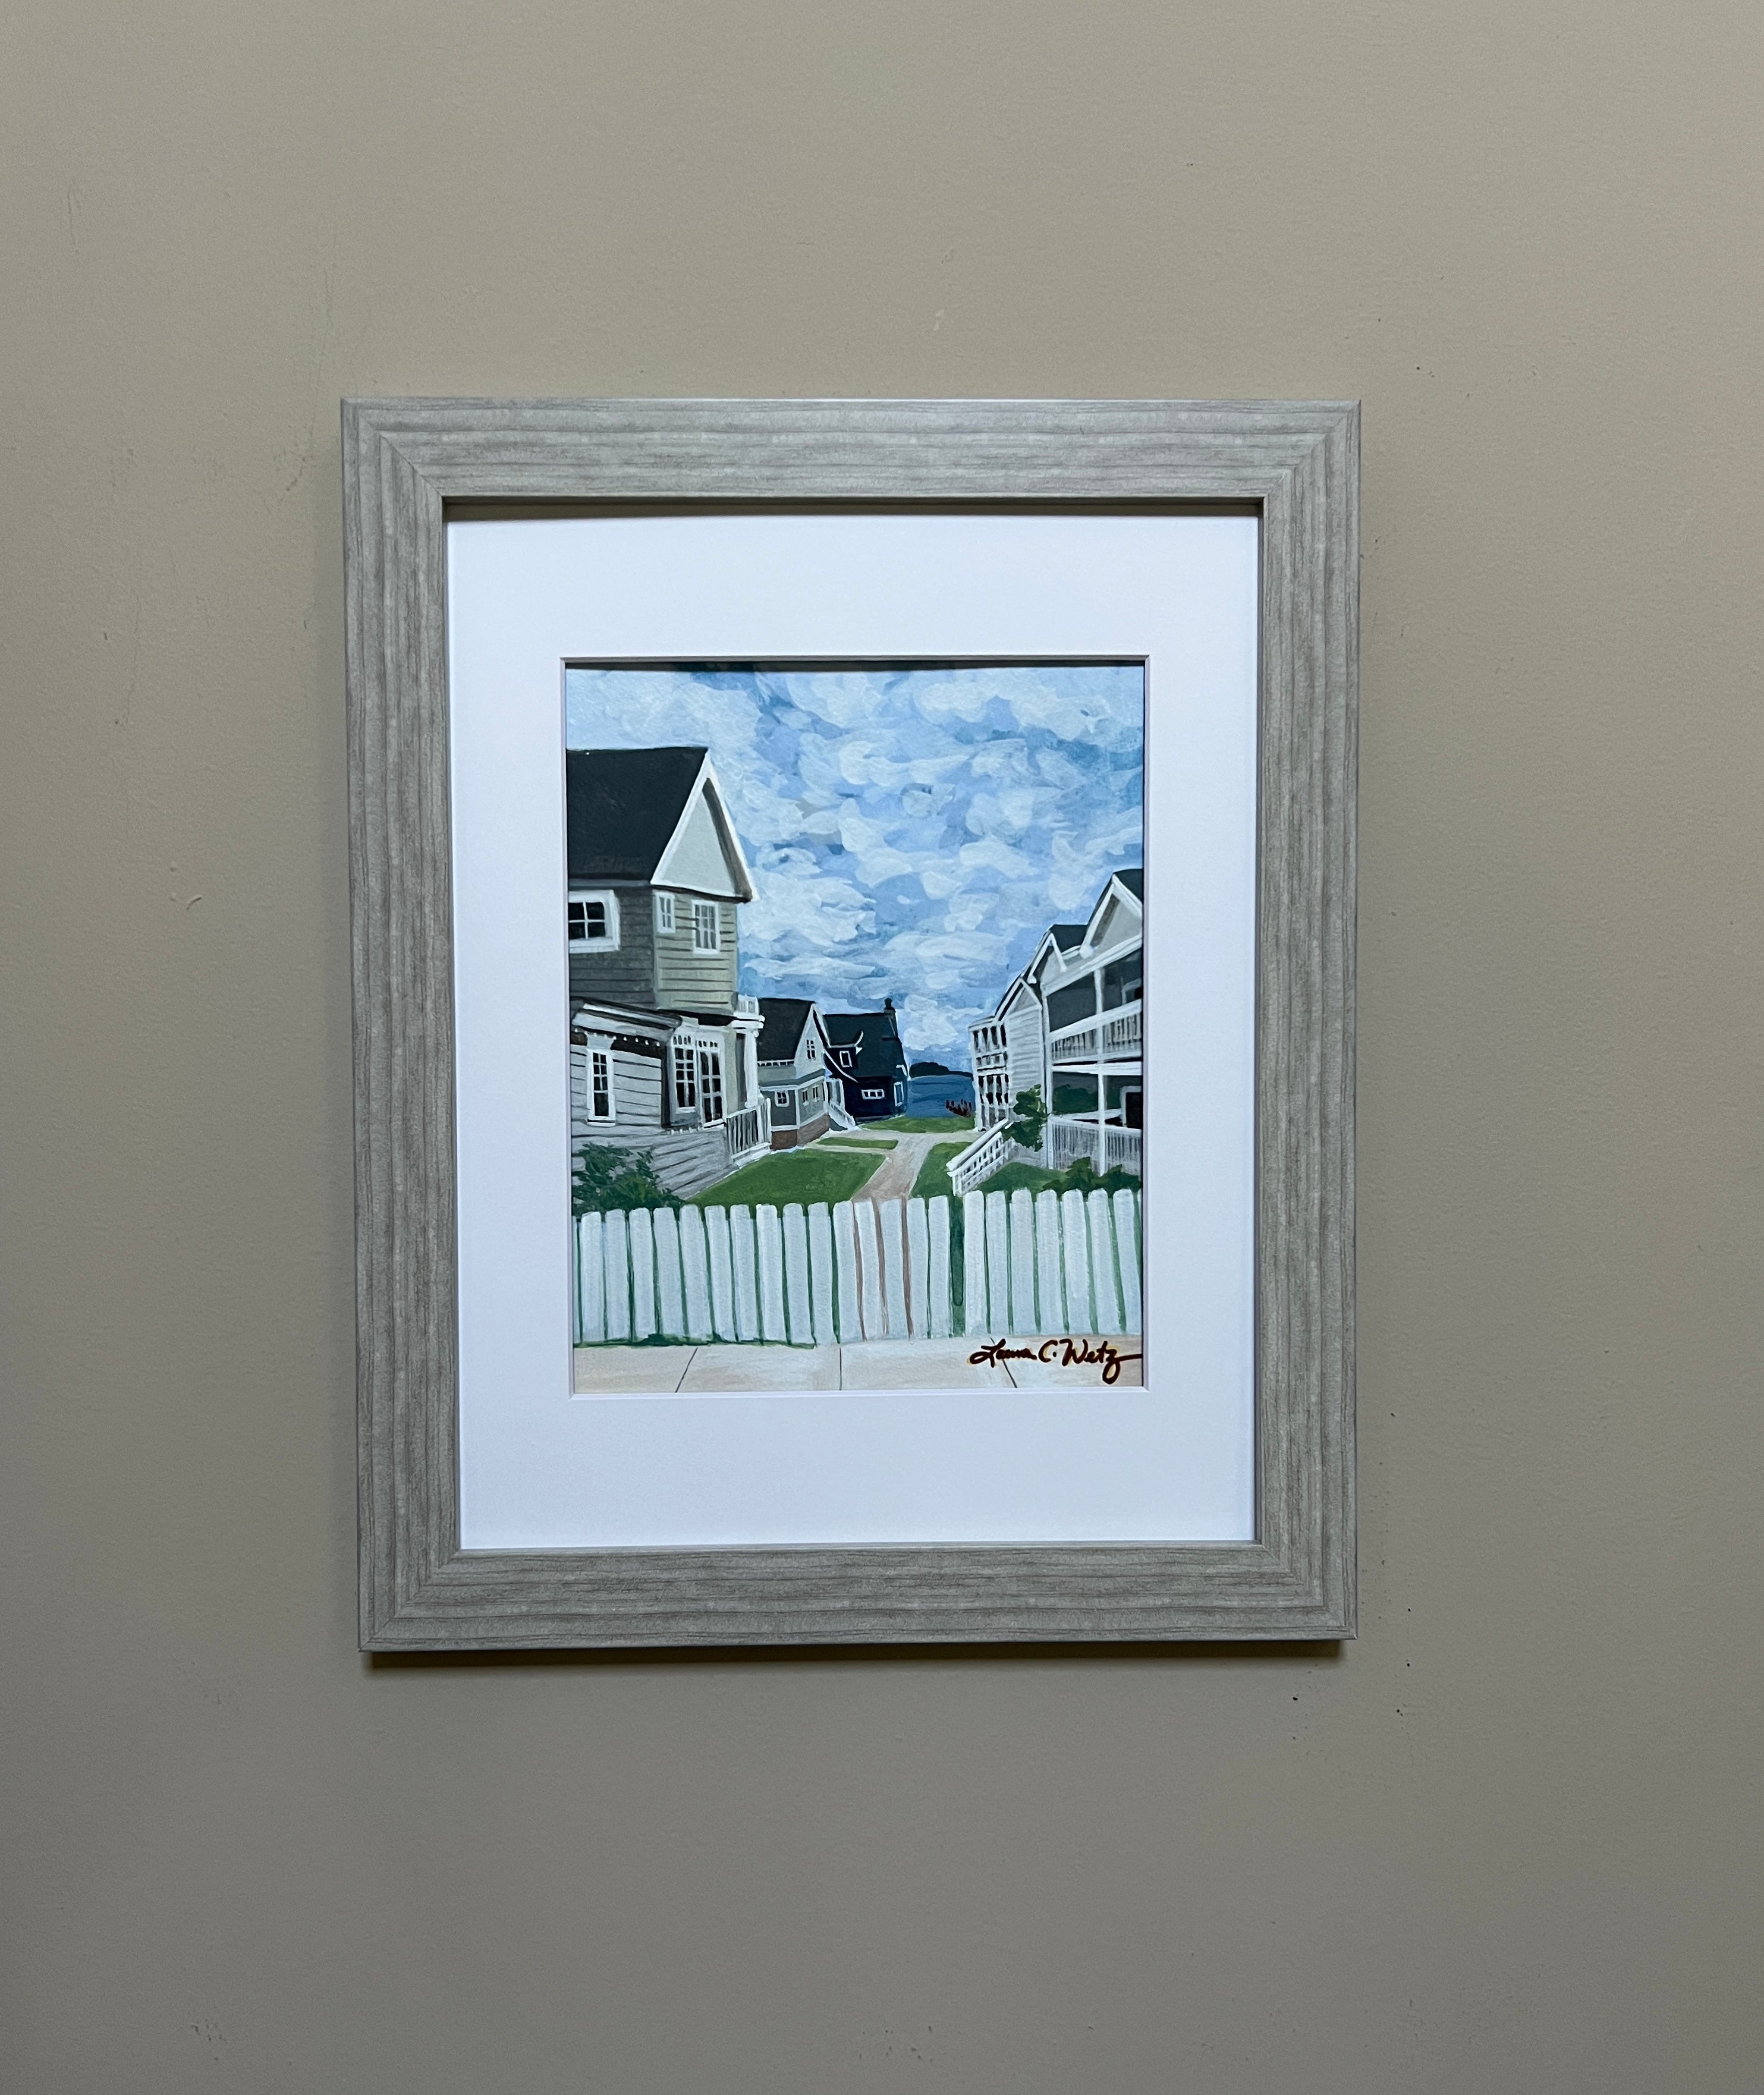 A Main Street View on Mackinac Island - Original Painting - Matted, Unframed.